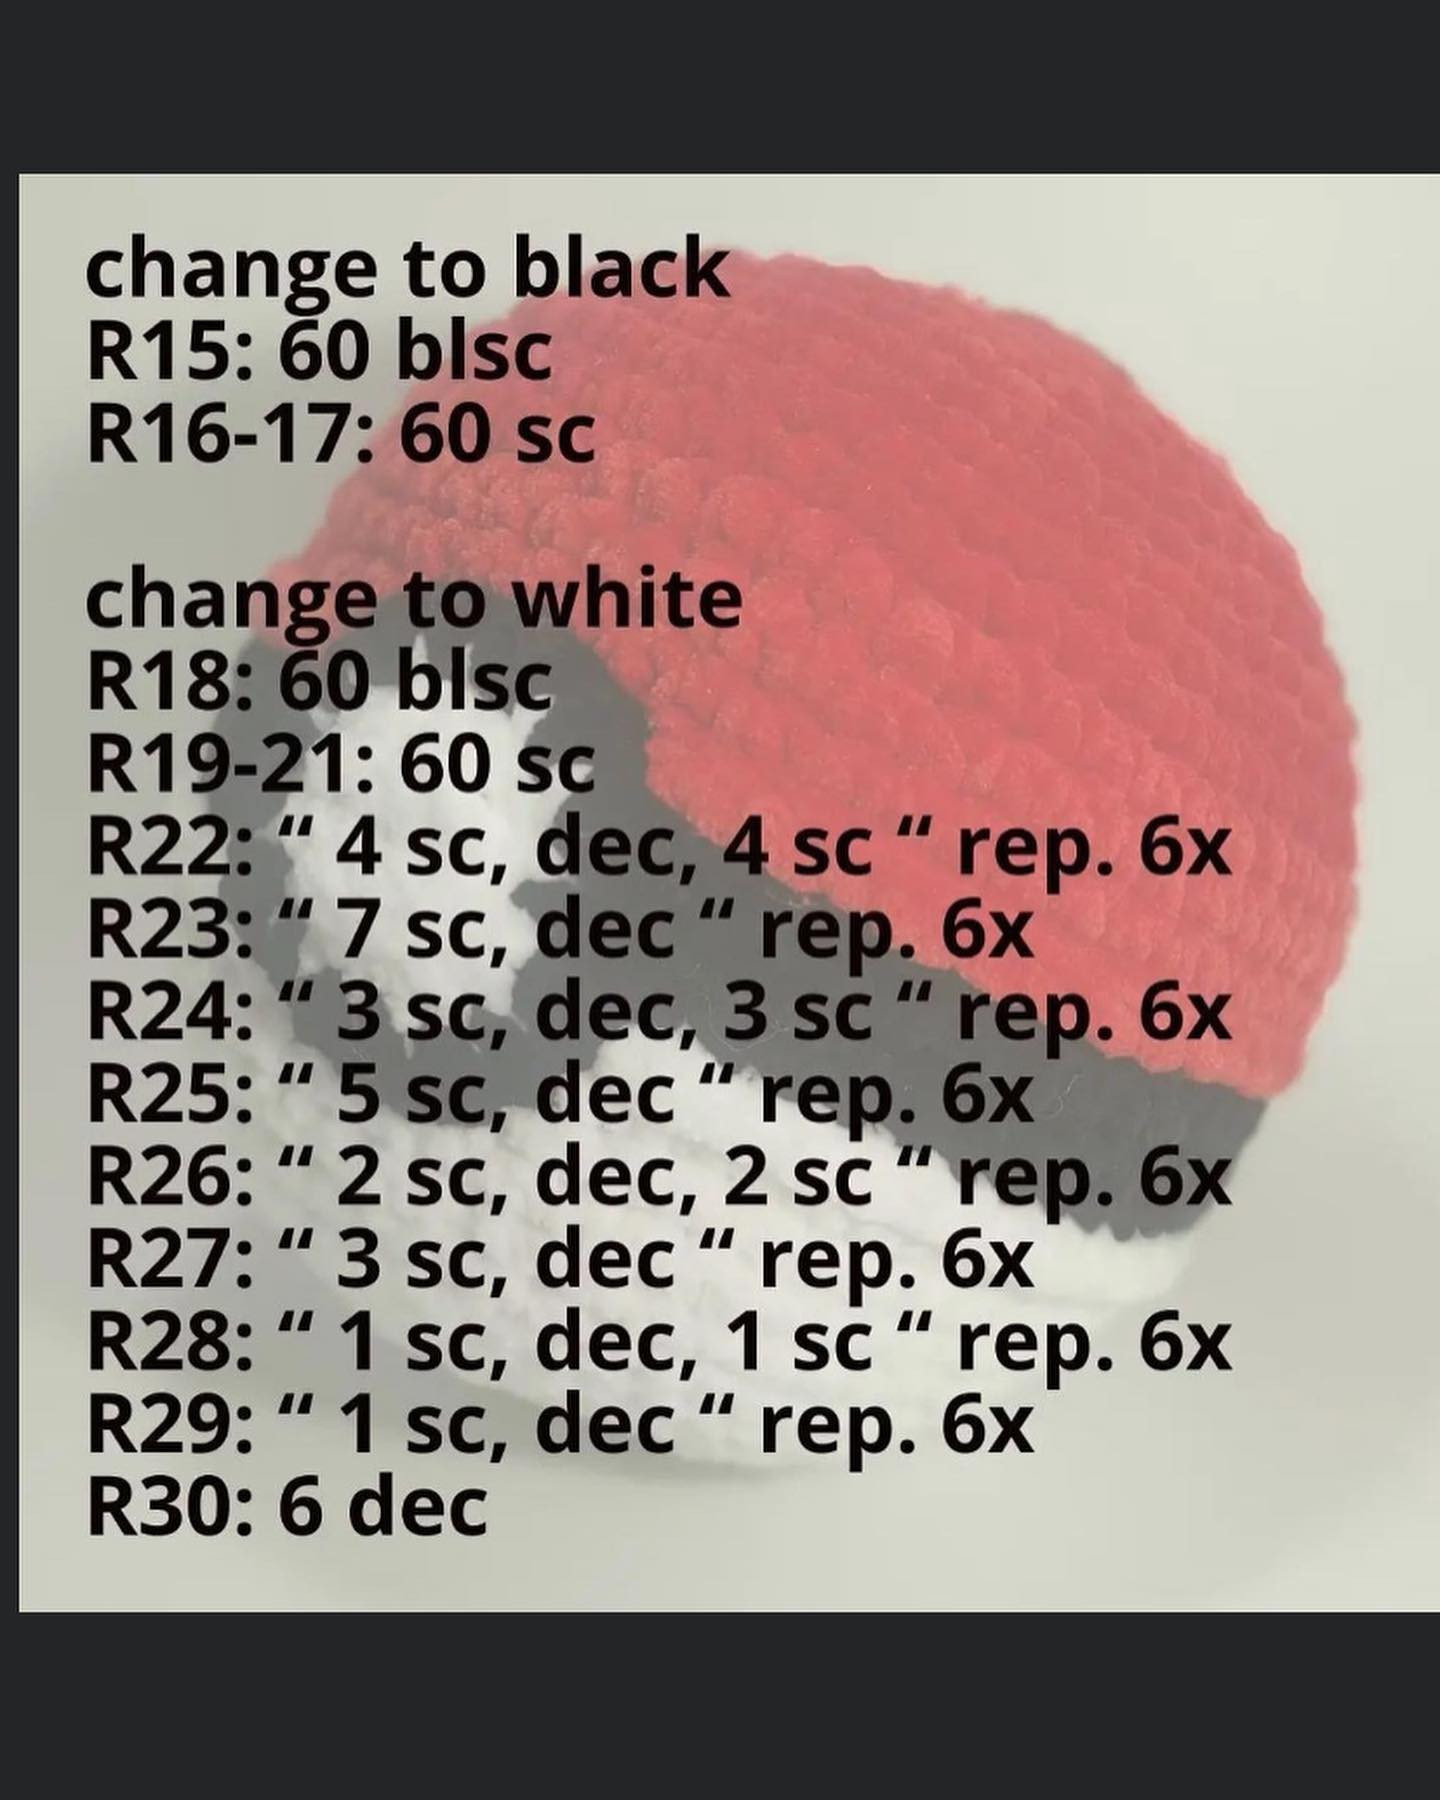 red pokeball, white crochet pattern